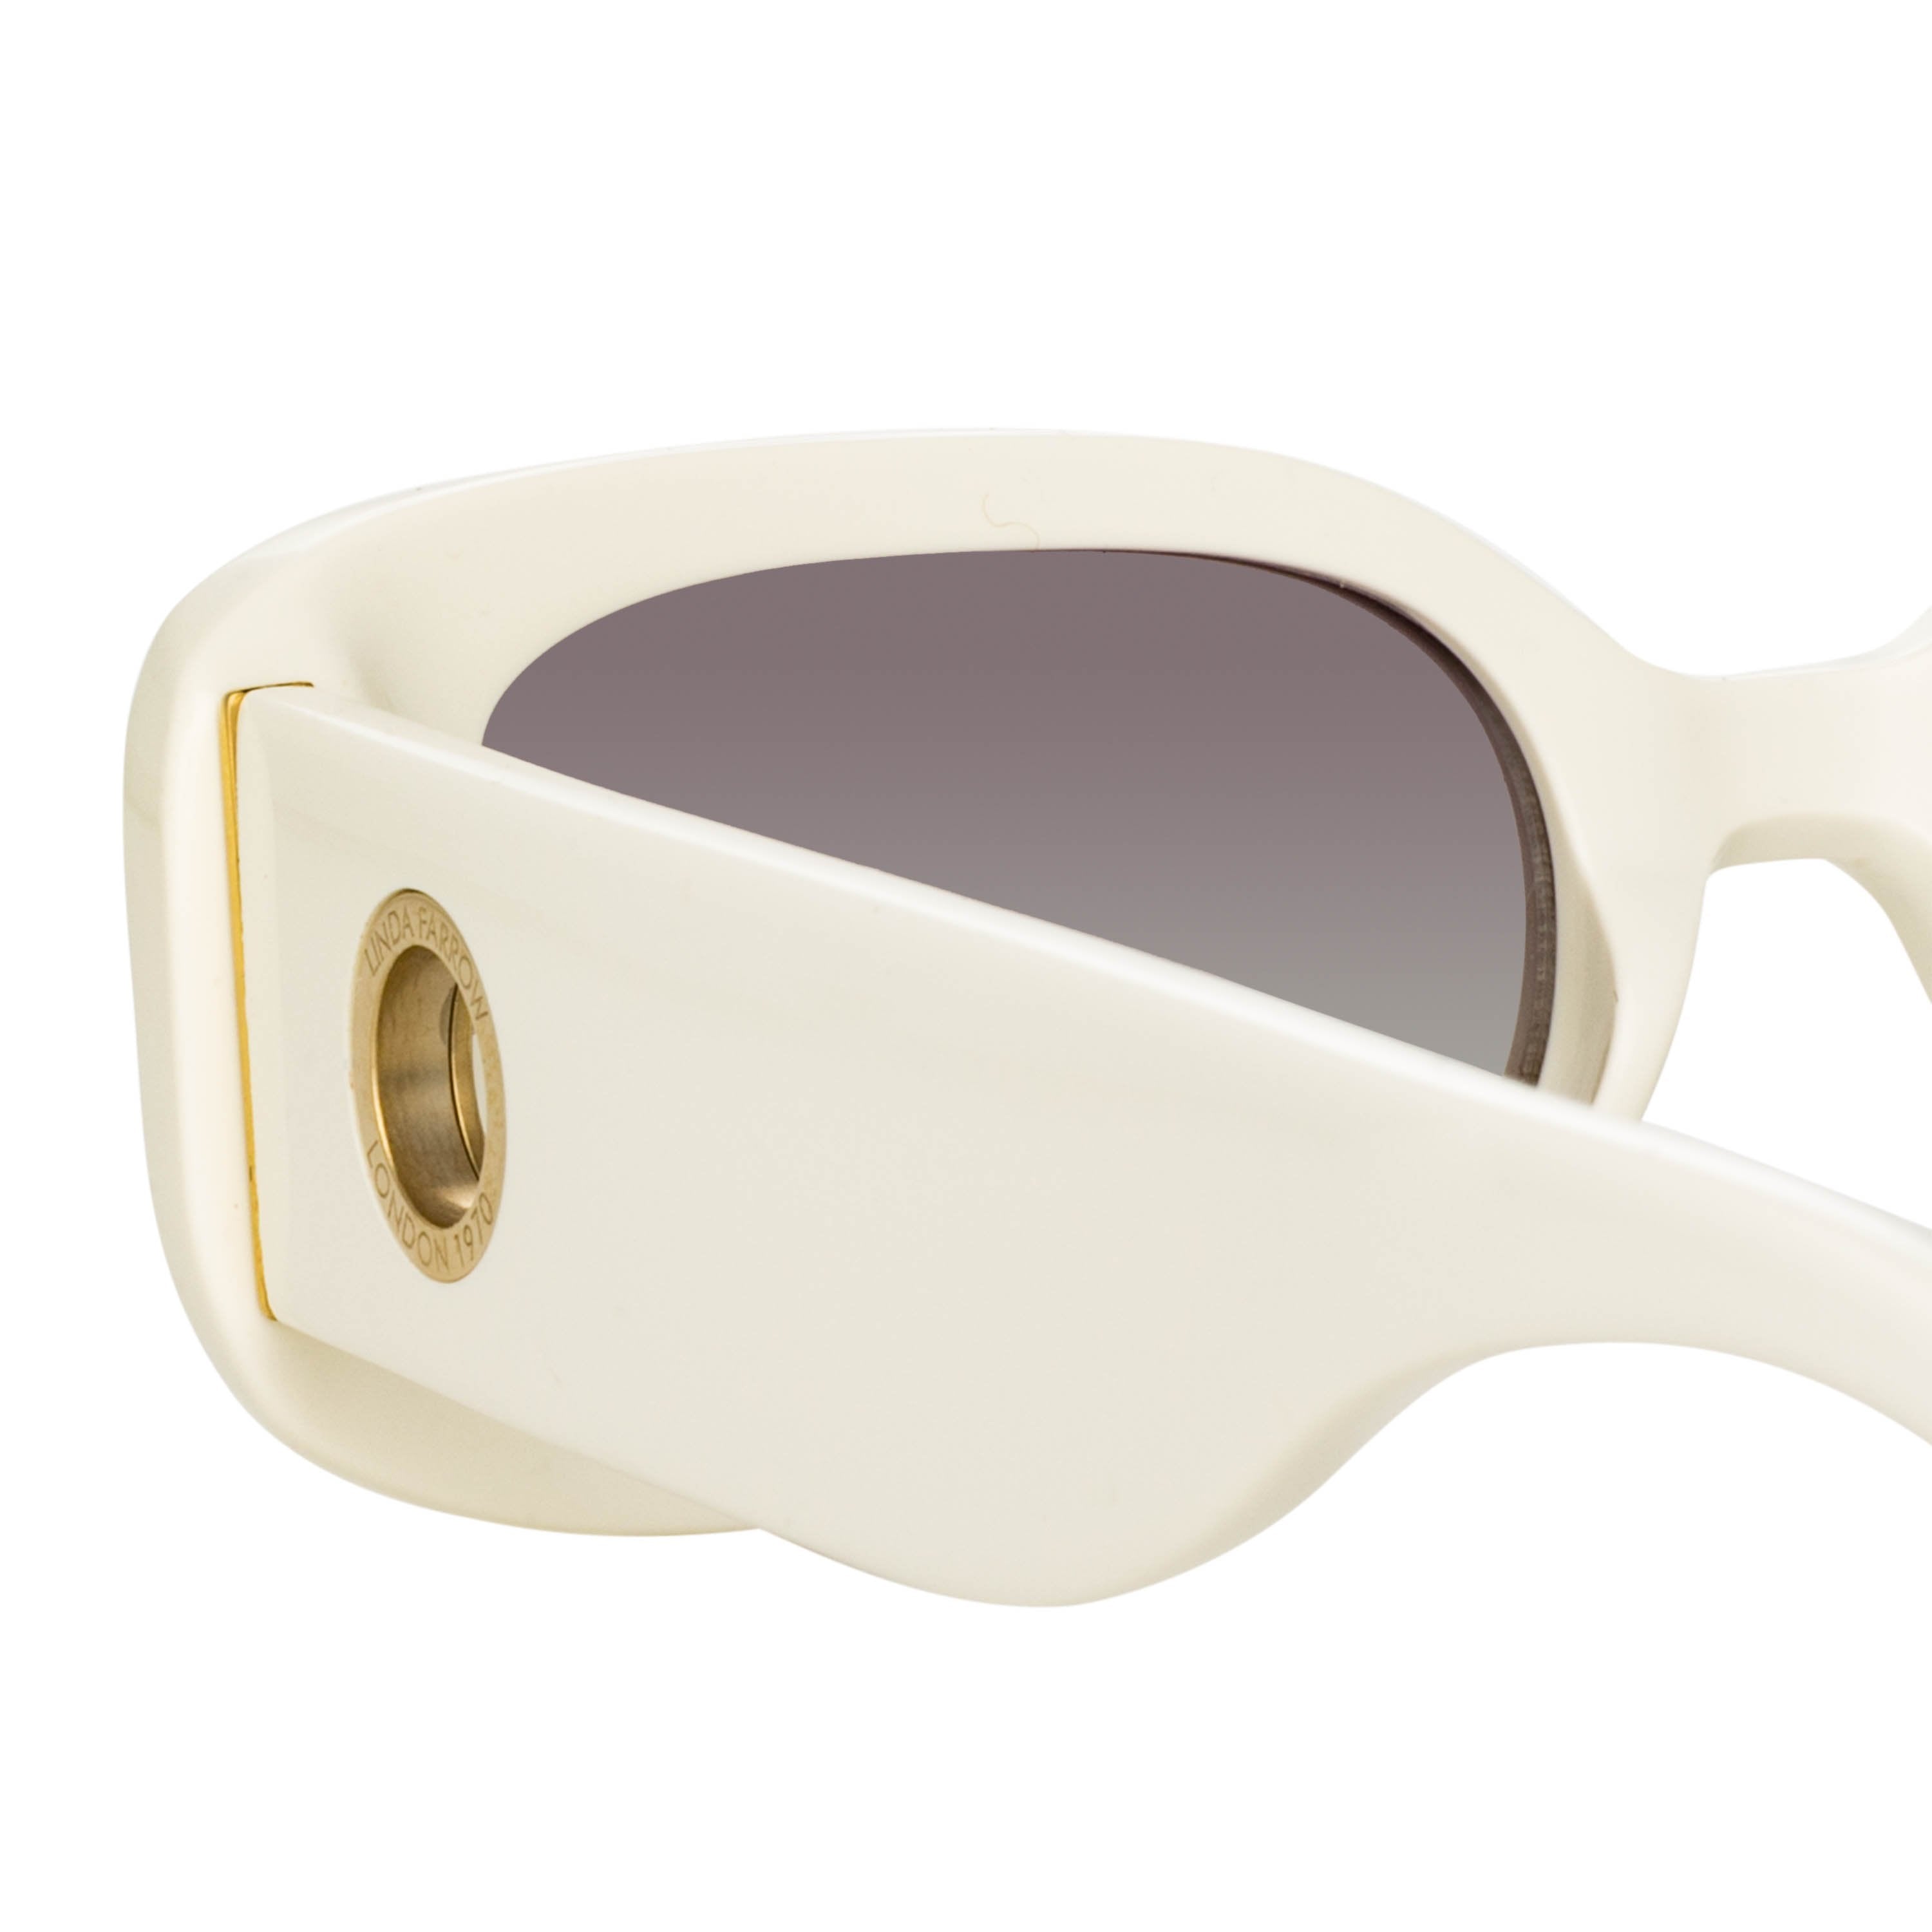 Color_LFL1117C3SUN - Lola Rectangular Sunglasses in White